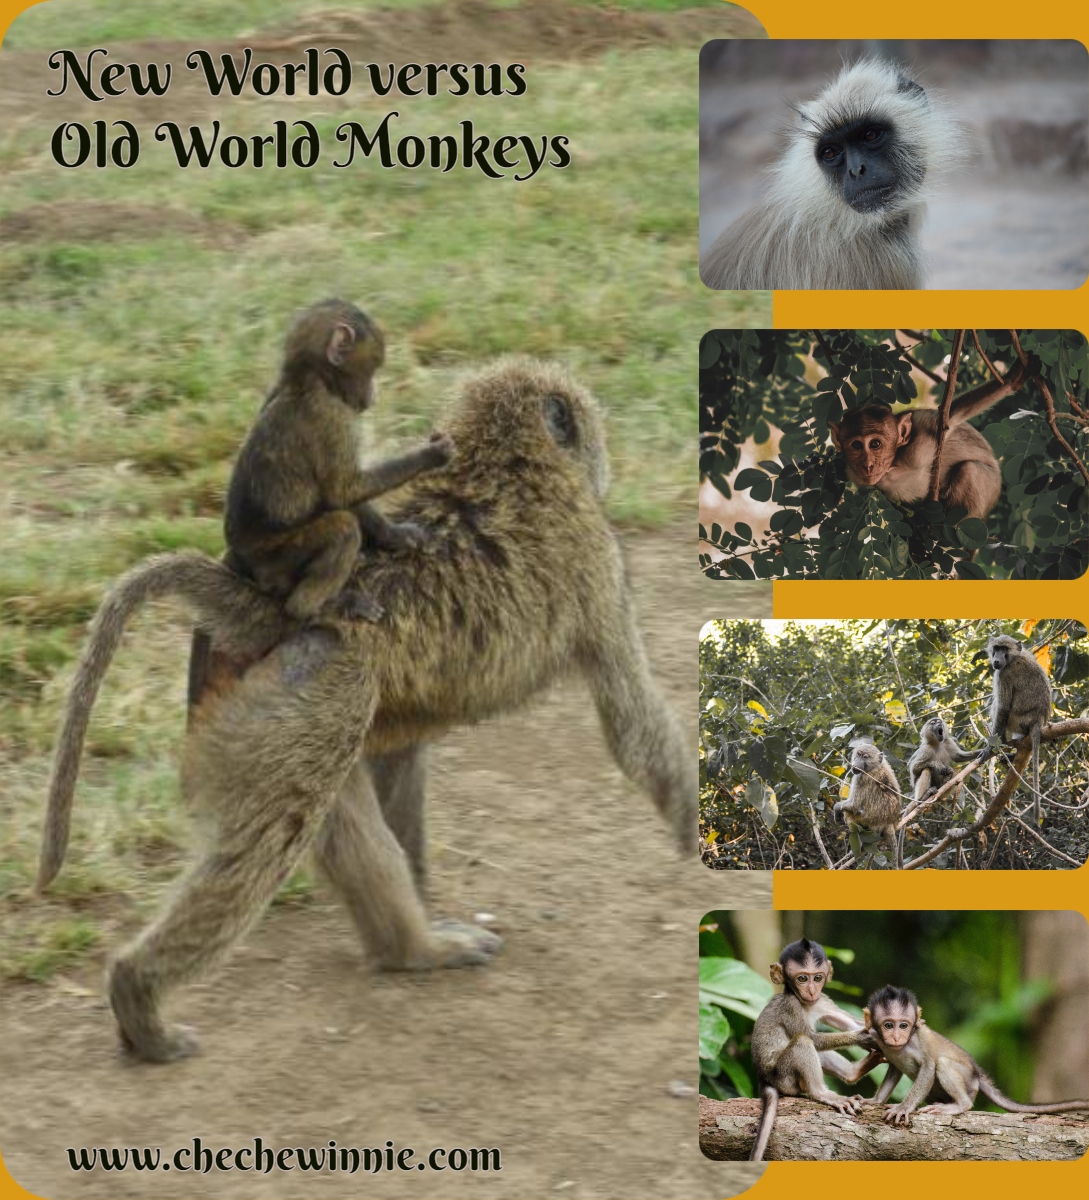 New World versus Old World Monkeys